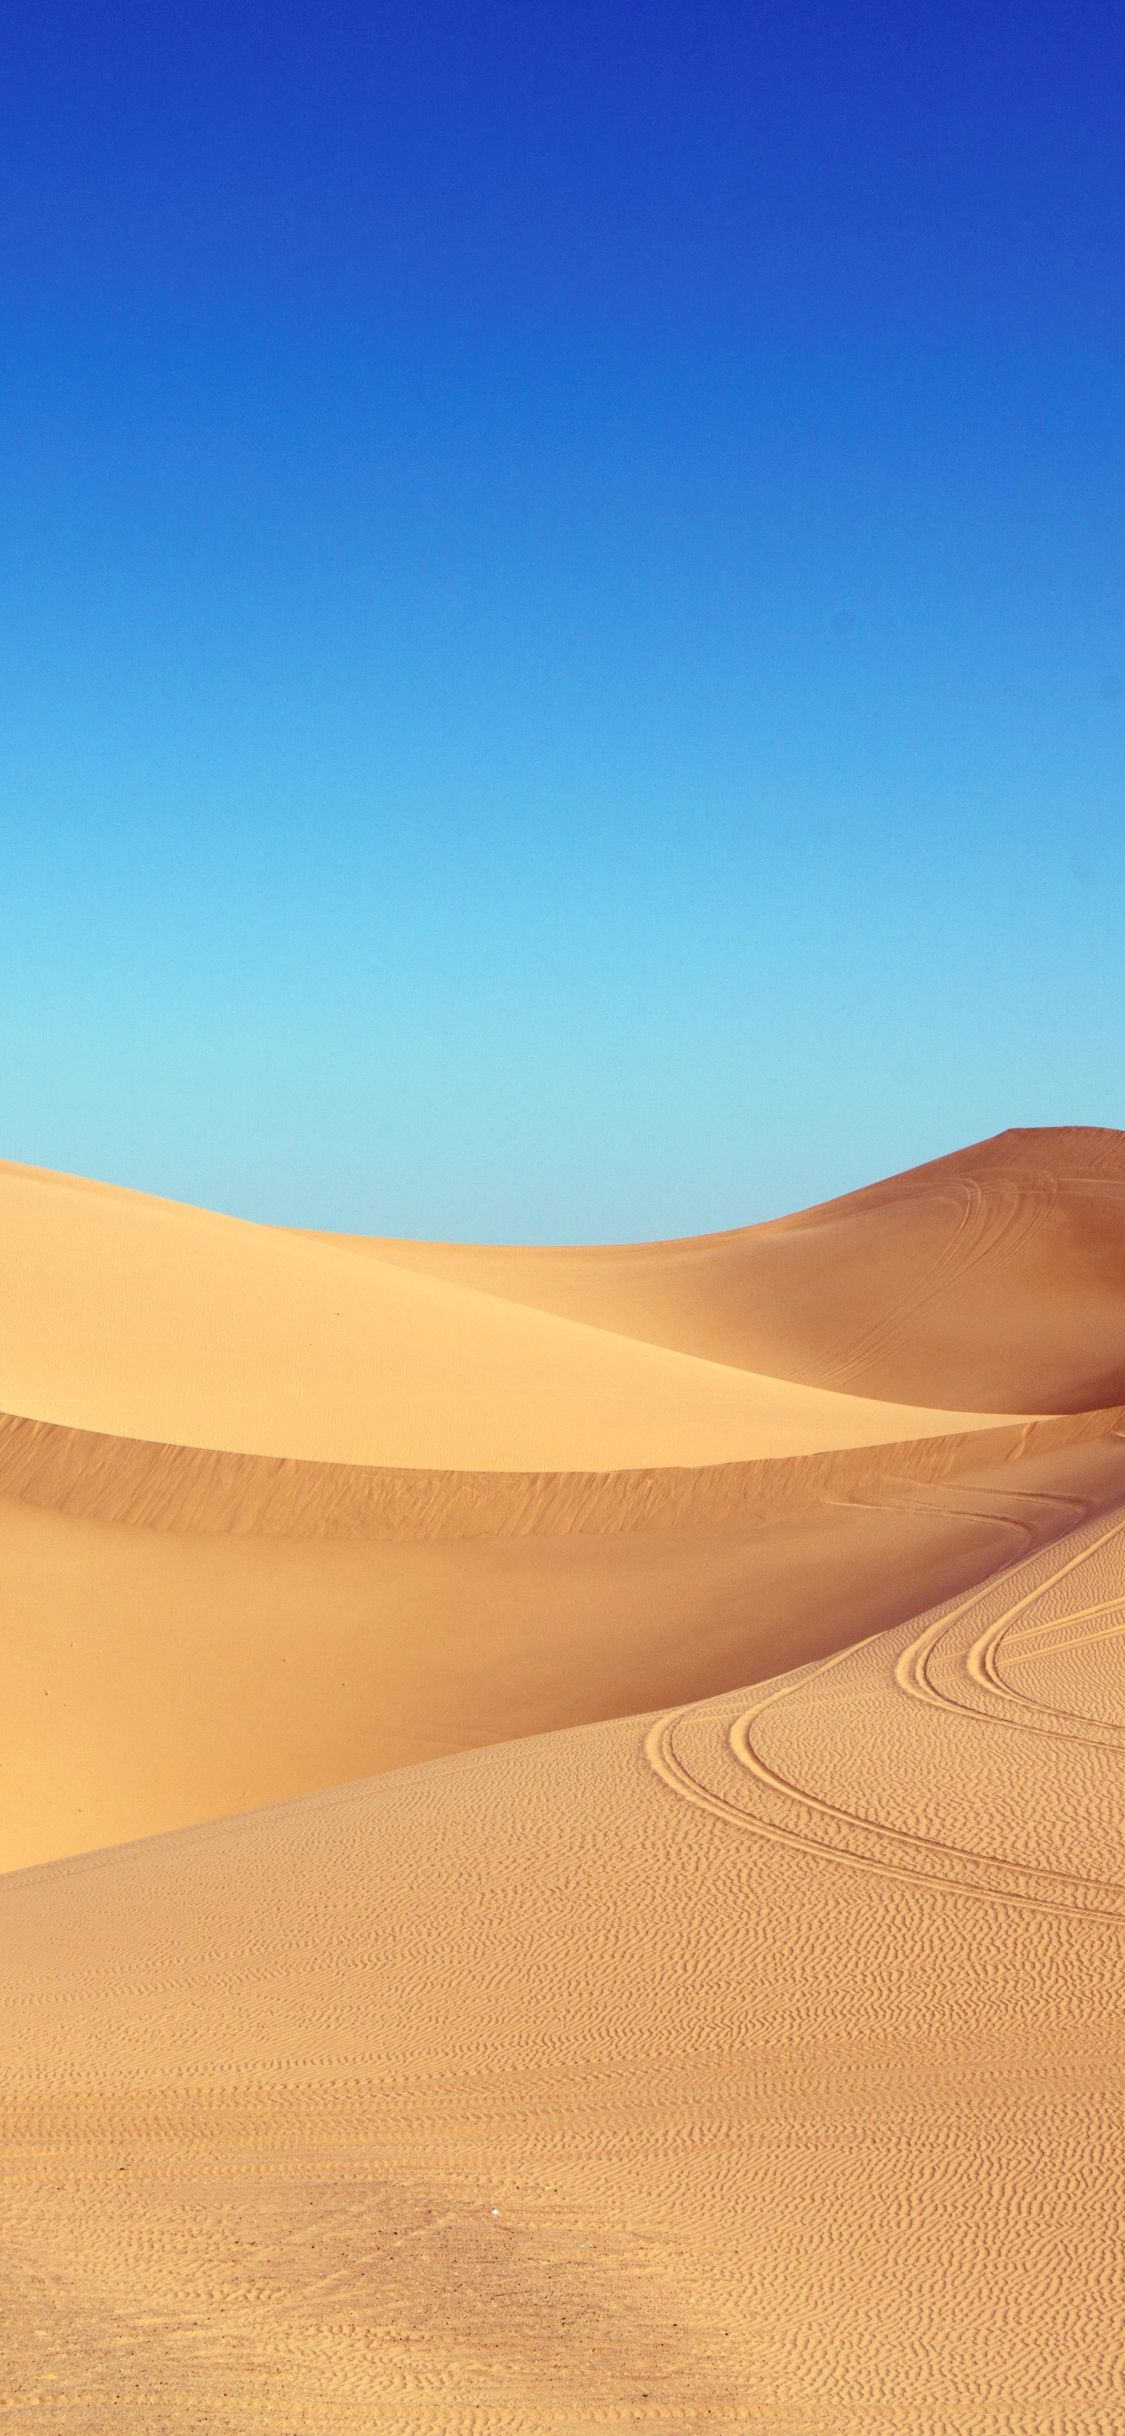 Download 1125x2436 wallpaper sahara desert, sand, clean skyline, blue sky, dunes, iphone x 1125x2436 HD image, background, 620